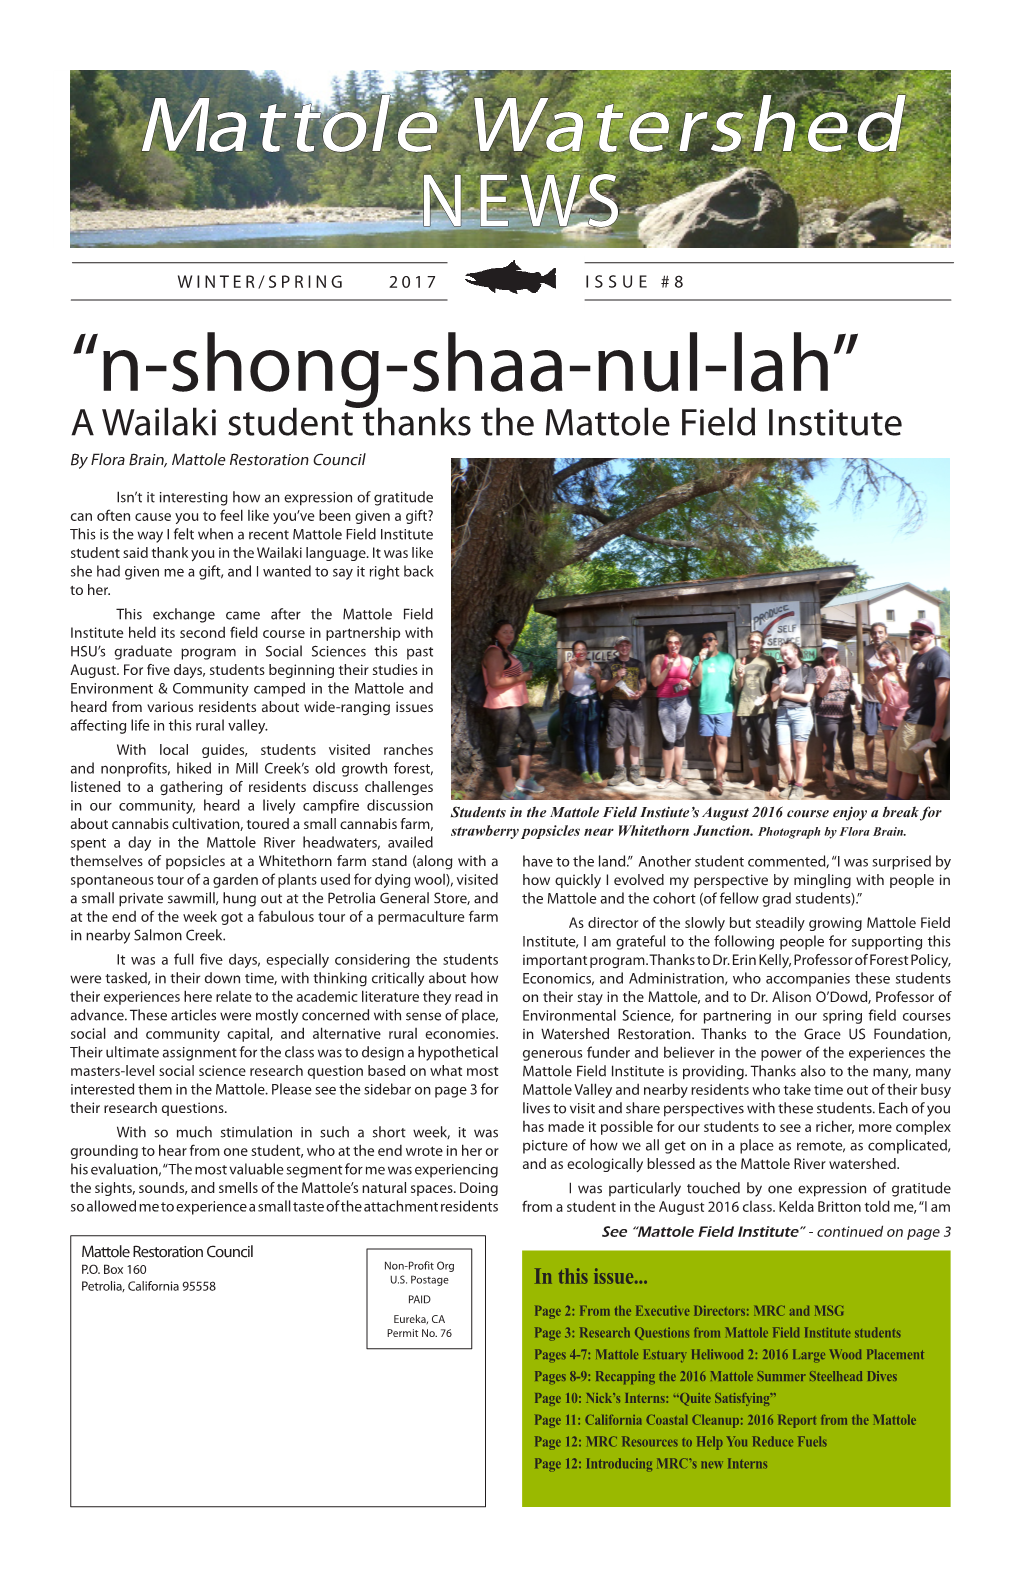 “N-Shong-Shaa-Nul-Lah” a Wailaki Student Thanks the Mattole Field Institute by Flora Brain, Mattole Restoration Council